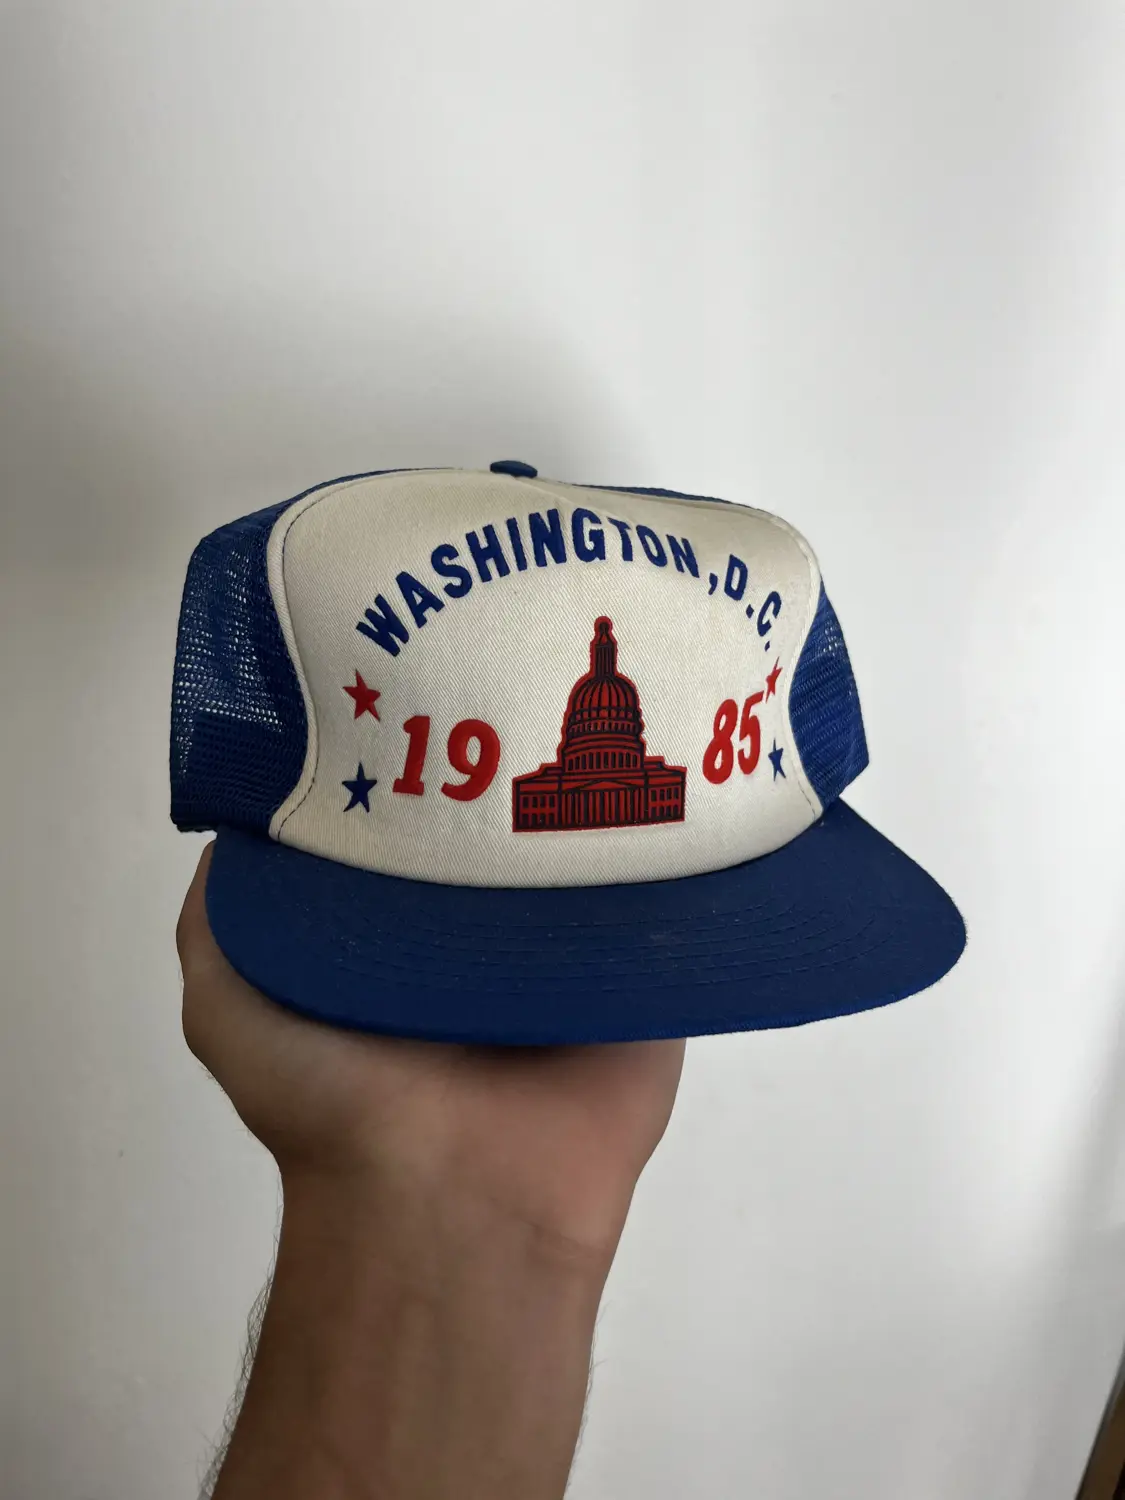 1985 Washington D.C. Hat